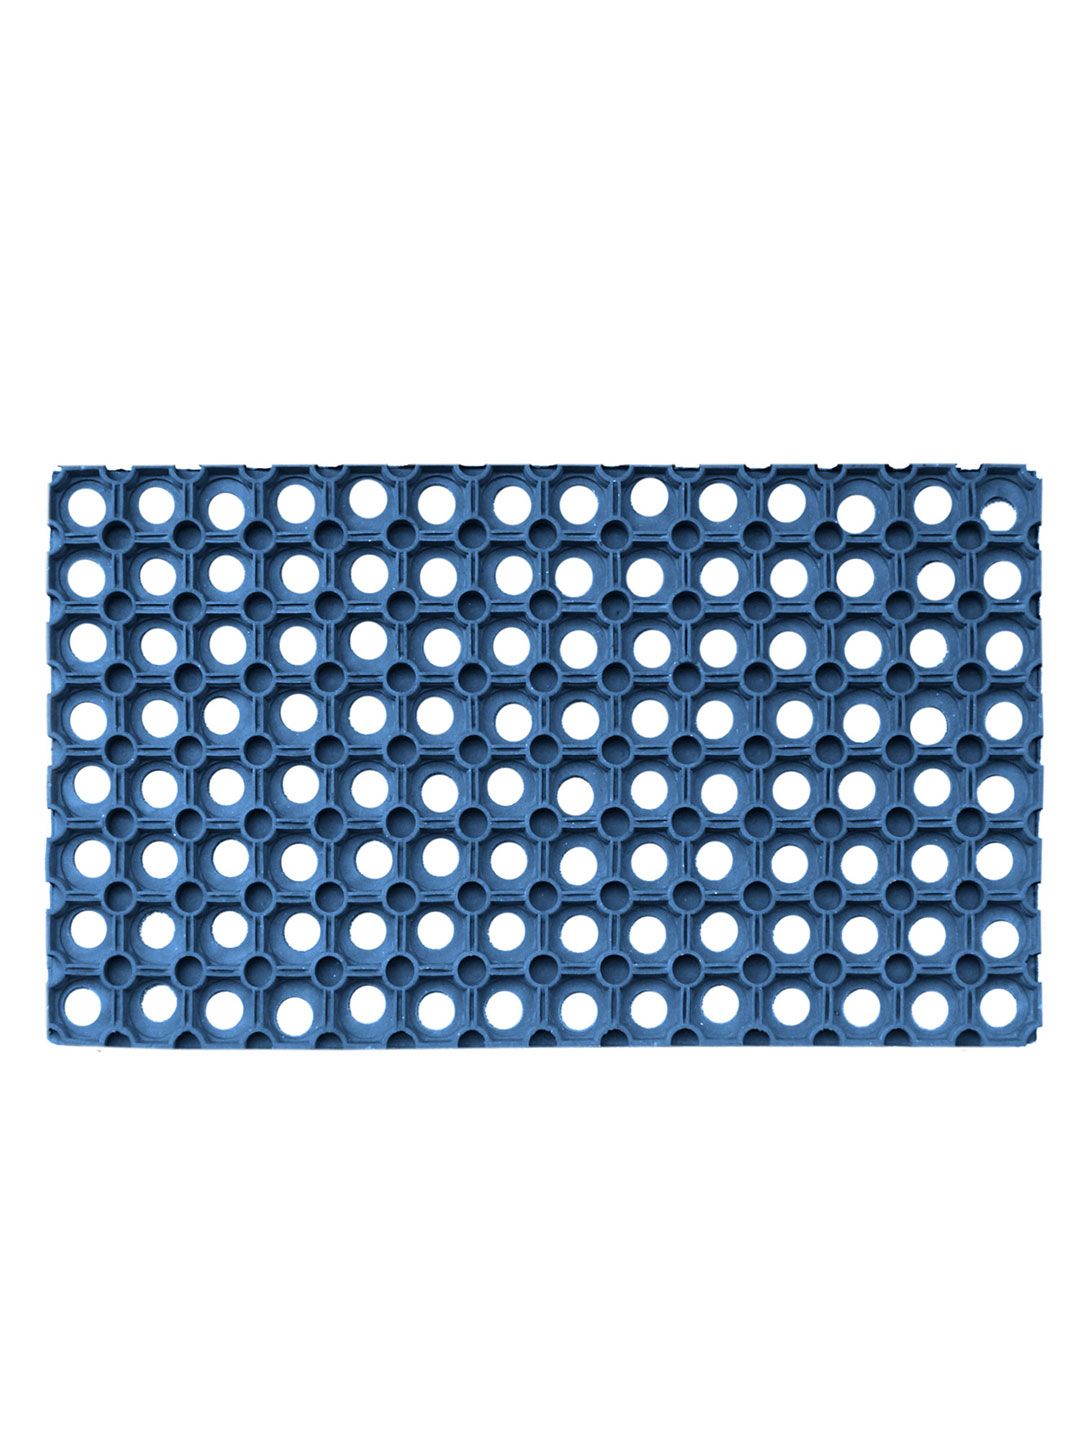 LUXEHOME INTERNATIONAL Blue Self-Design Anti-Skid Rubber Doormat Price in India